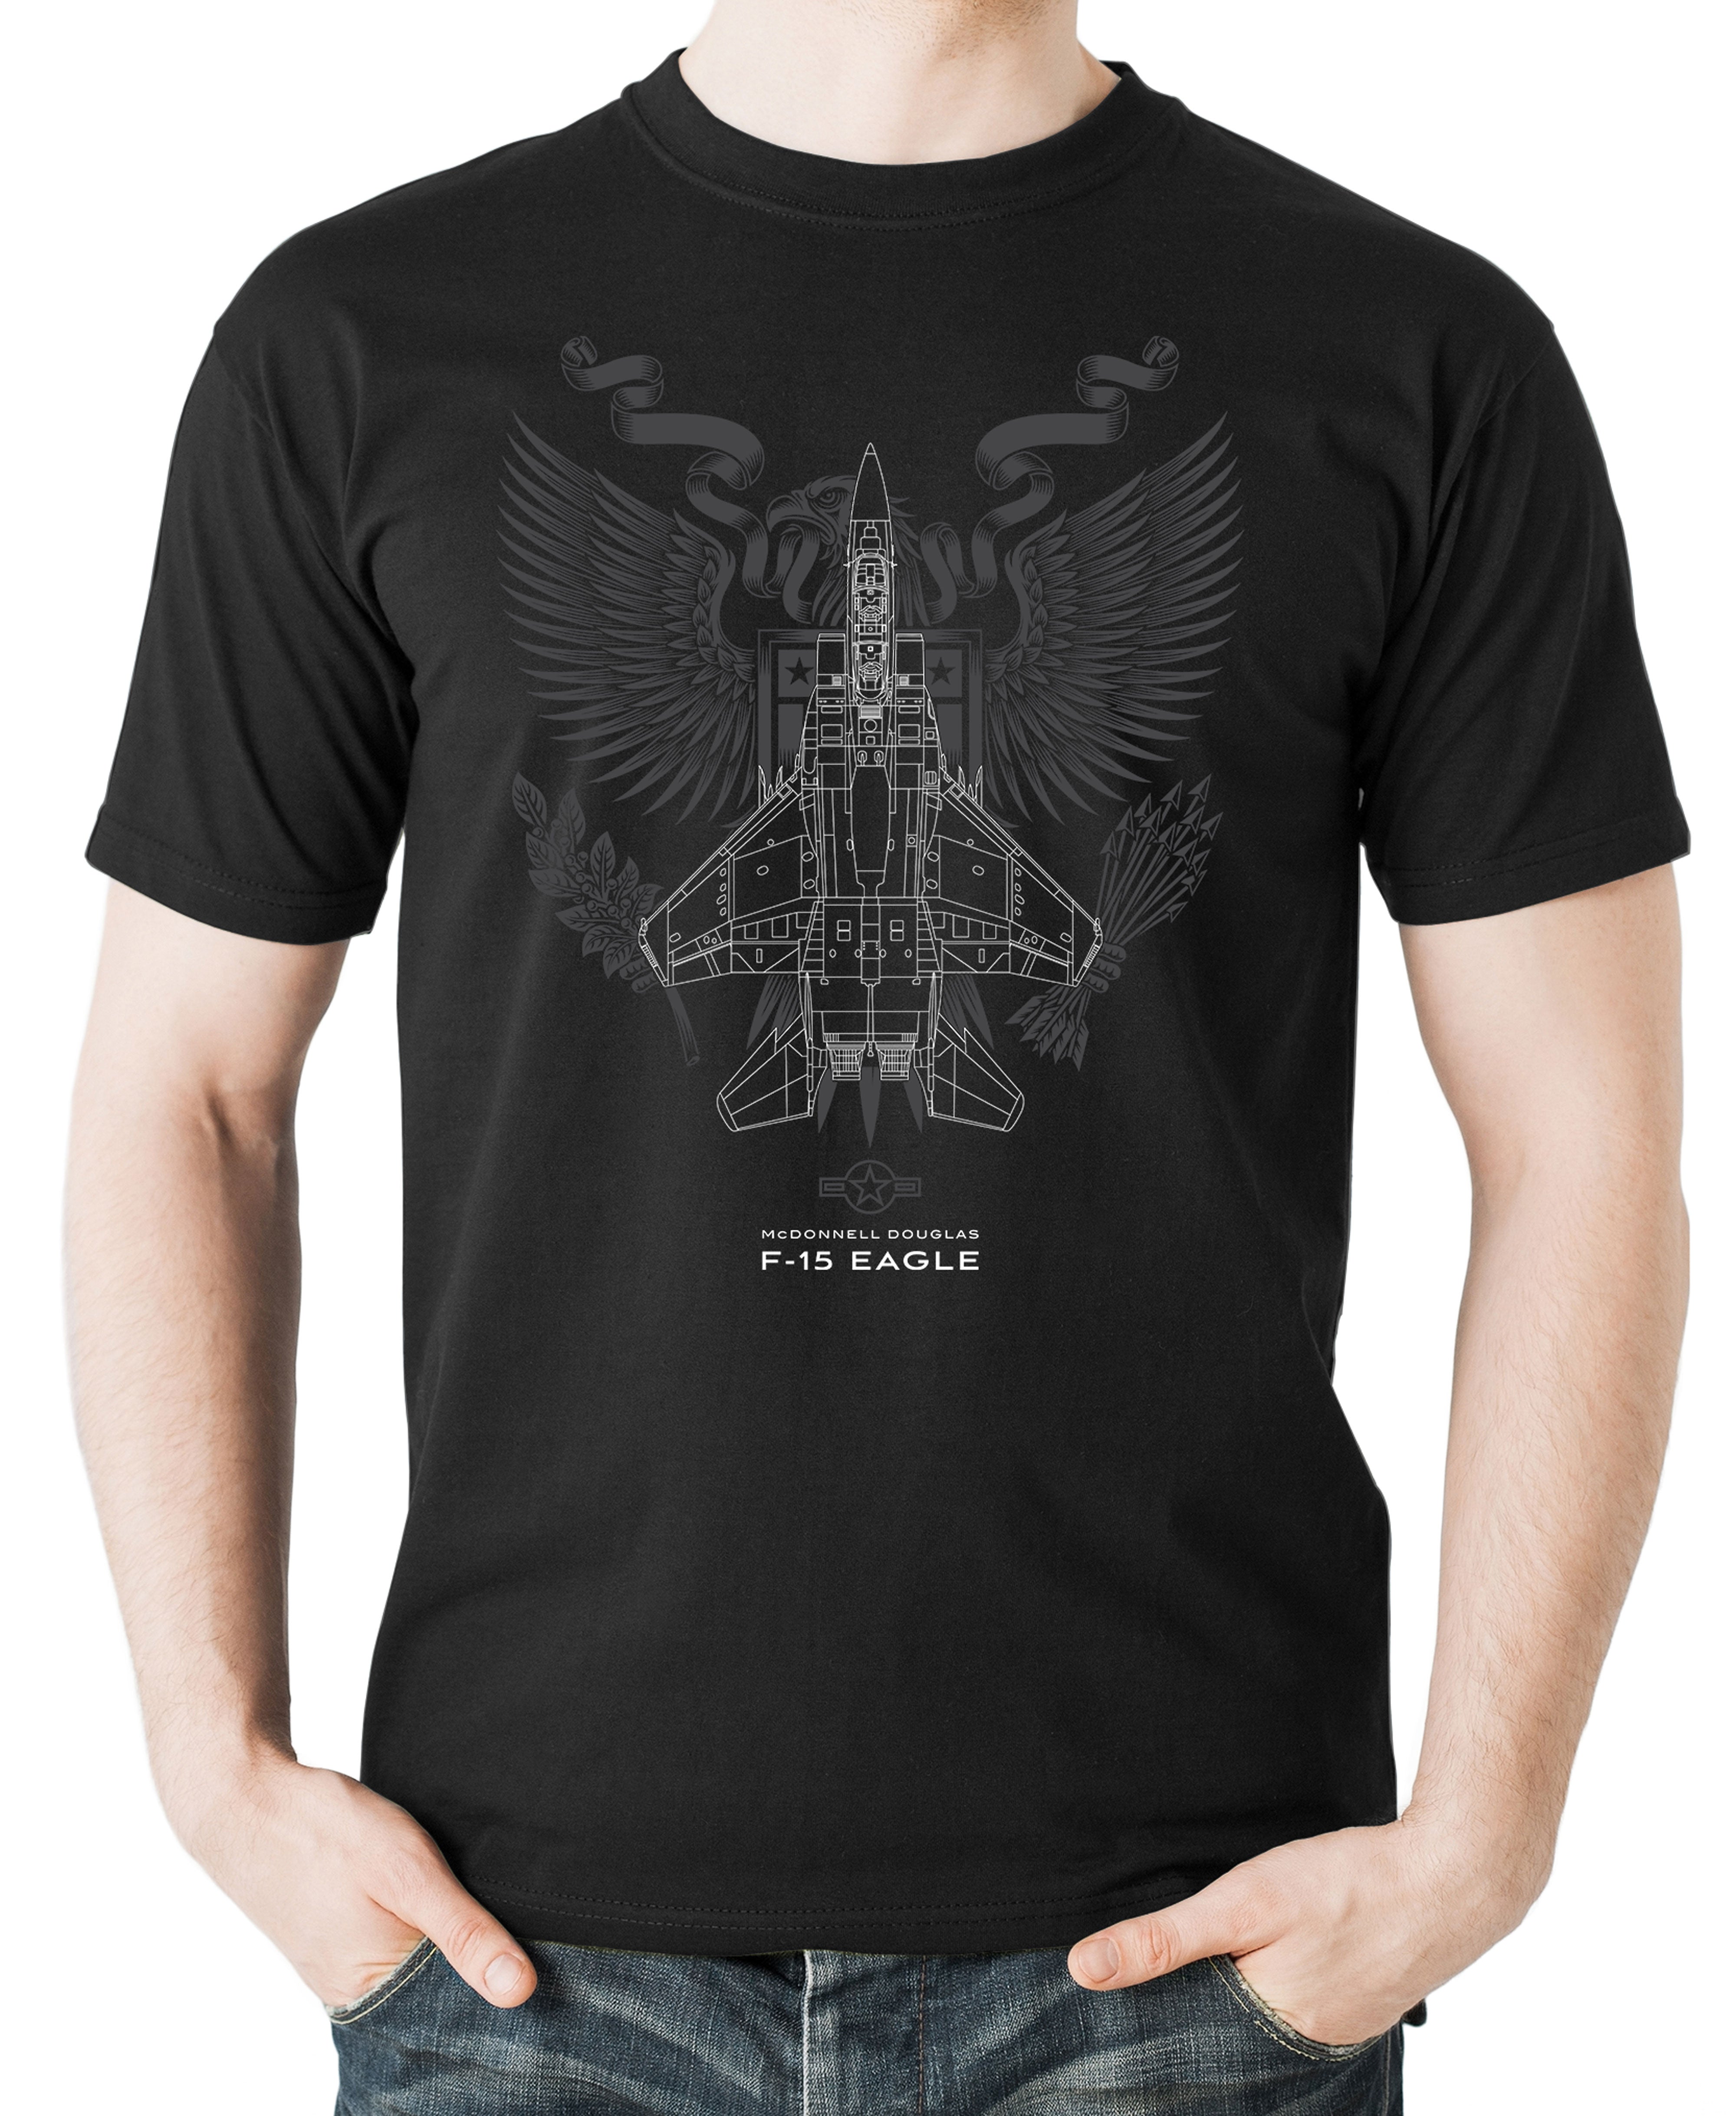 F-15 Eagle t-shirt